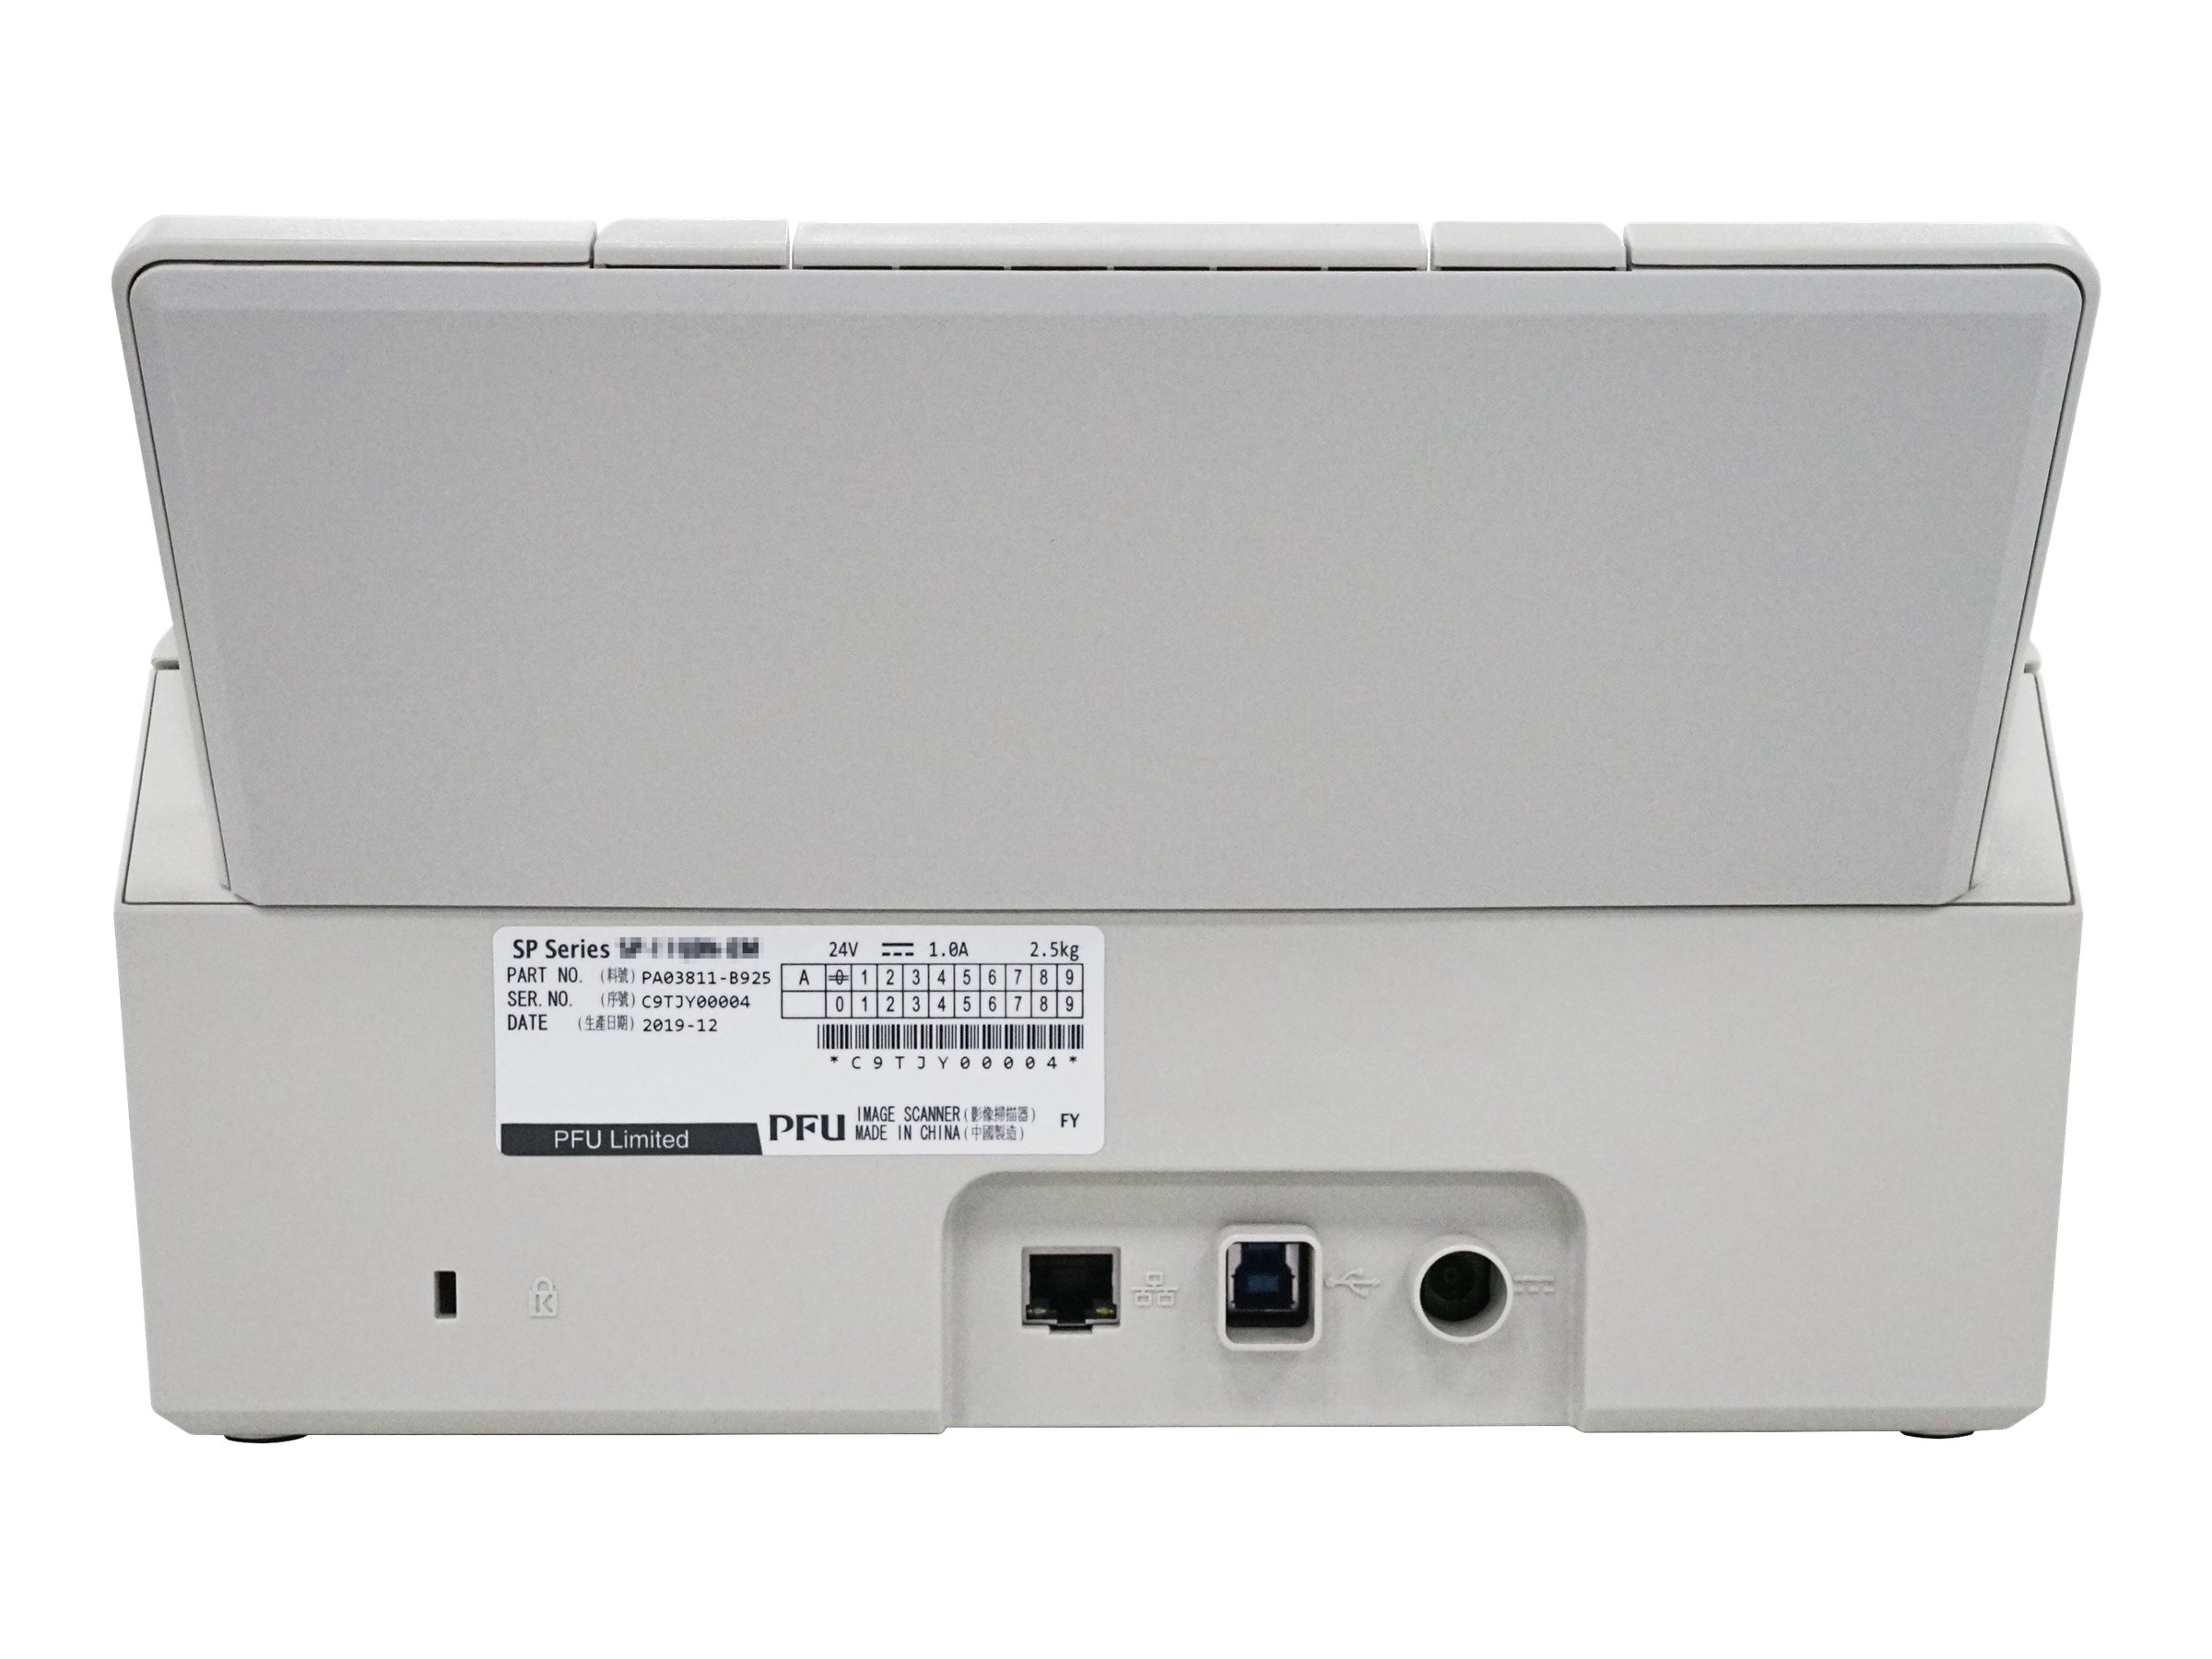 Fujitsu Ricoh SP-1125N - Dokumentenscanner - Dual CIS - Duplex - 216 x 355.6 mm - 600 dpi x 600 dpi - bis zu 25 Seiten/Min. (einfarbig)